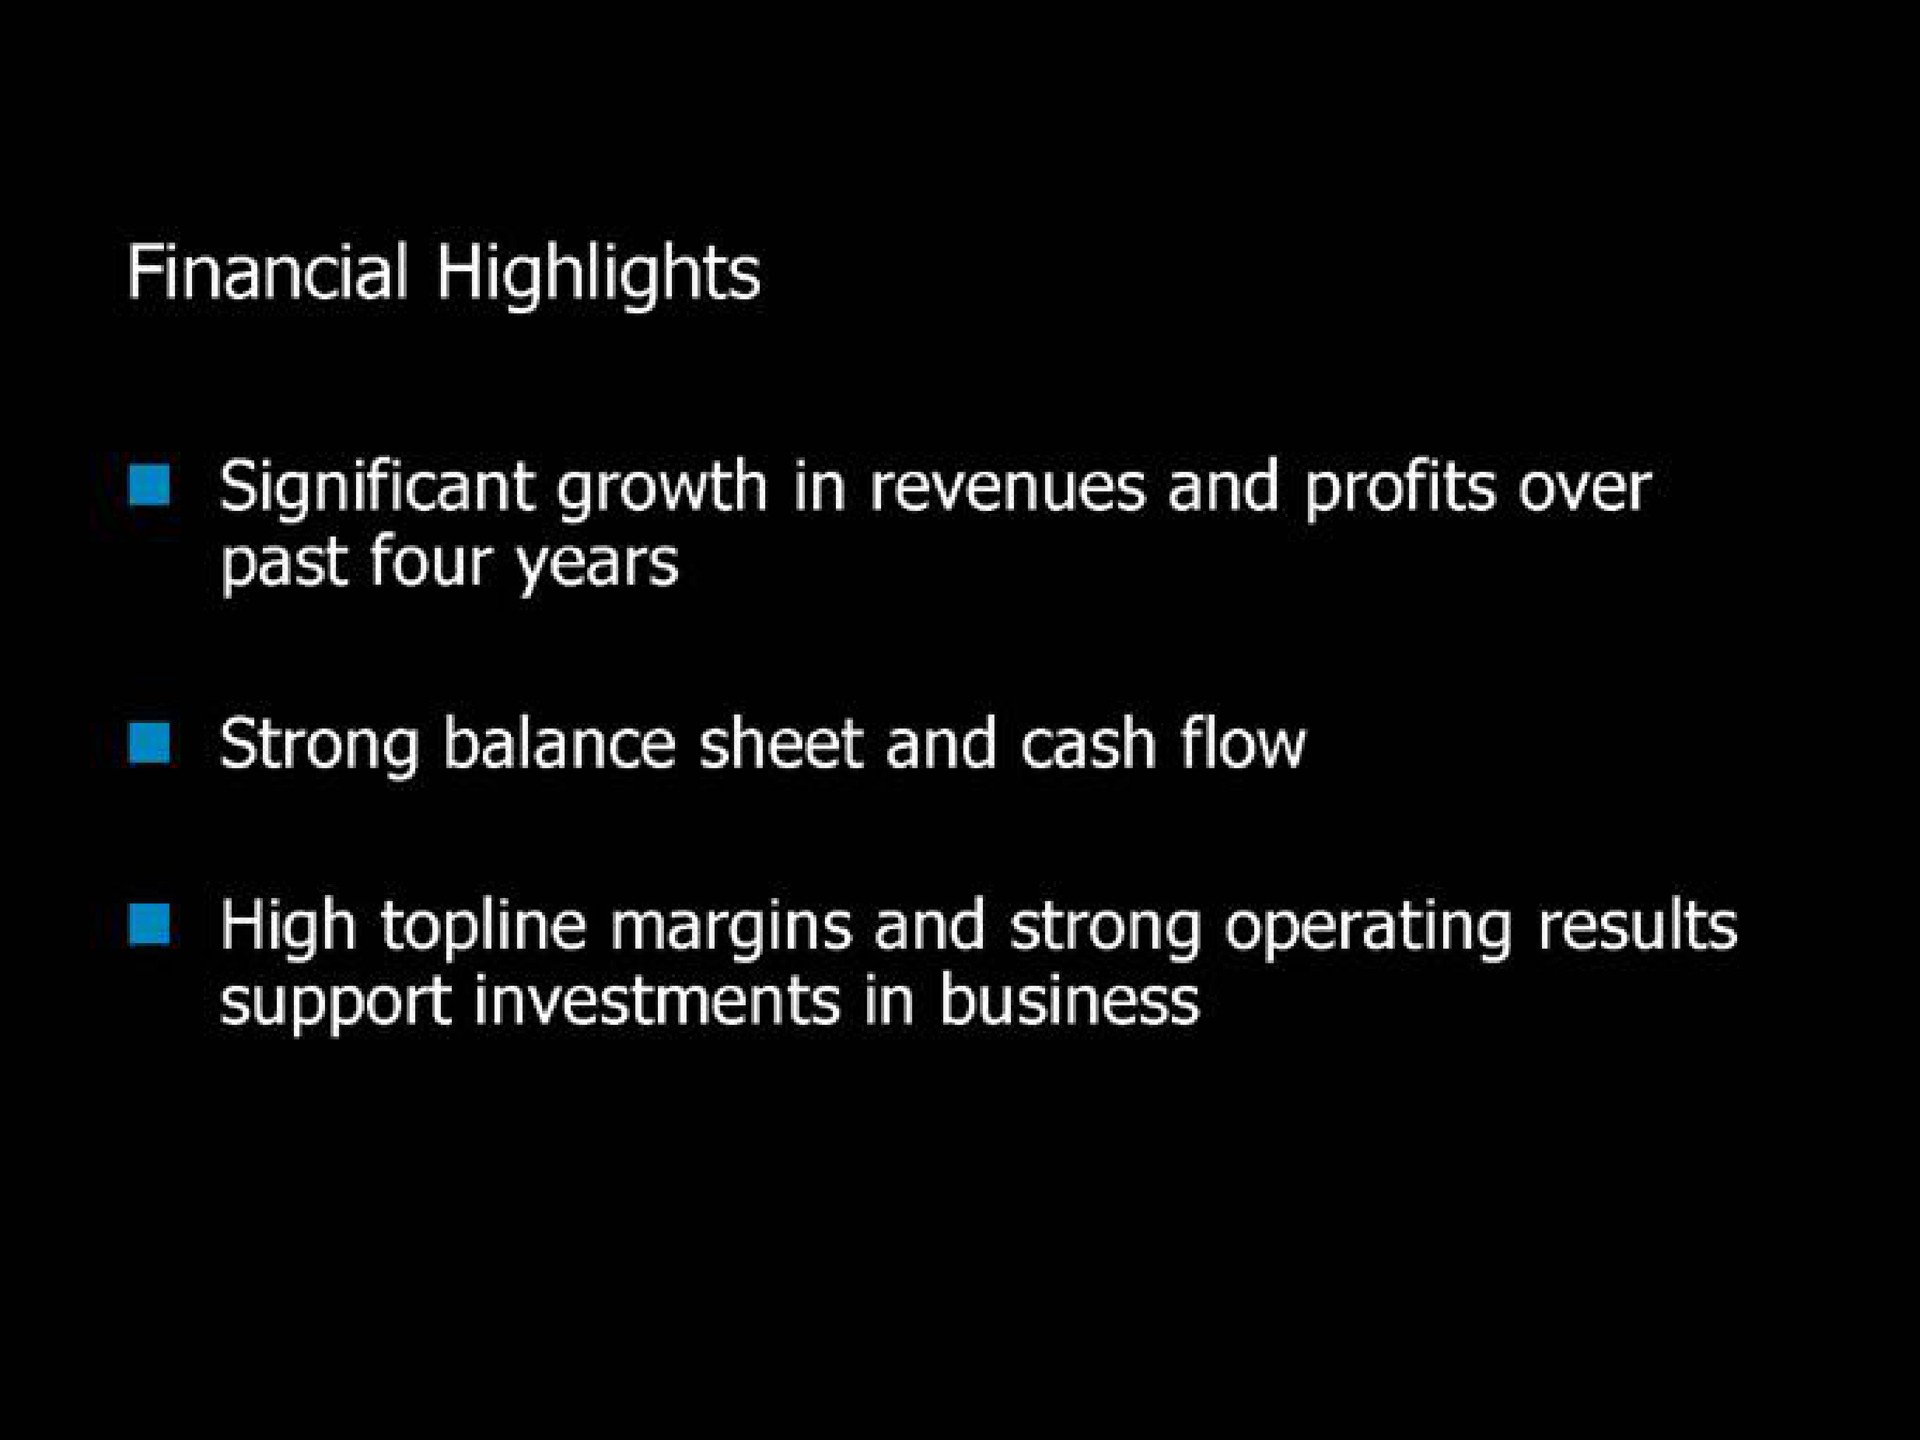 financial highlights strong balance sheet and cash flow | Blockbuster Video